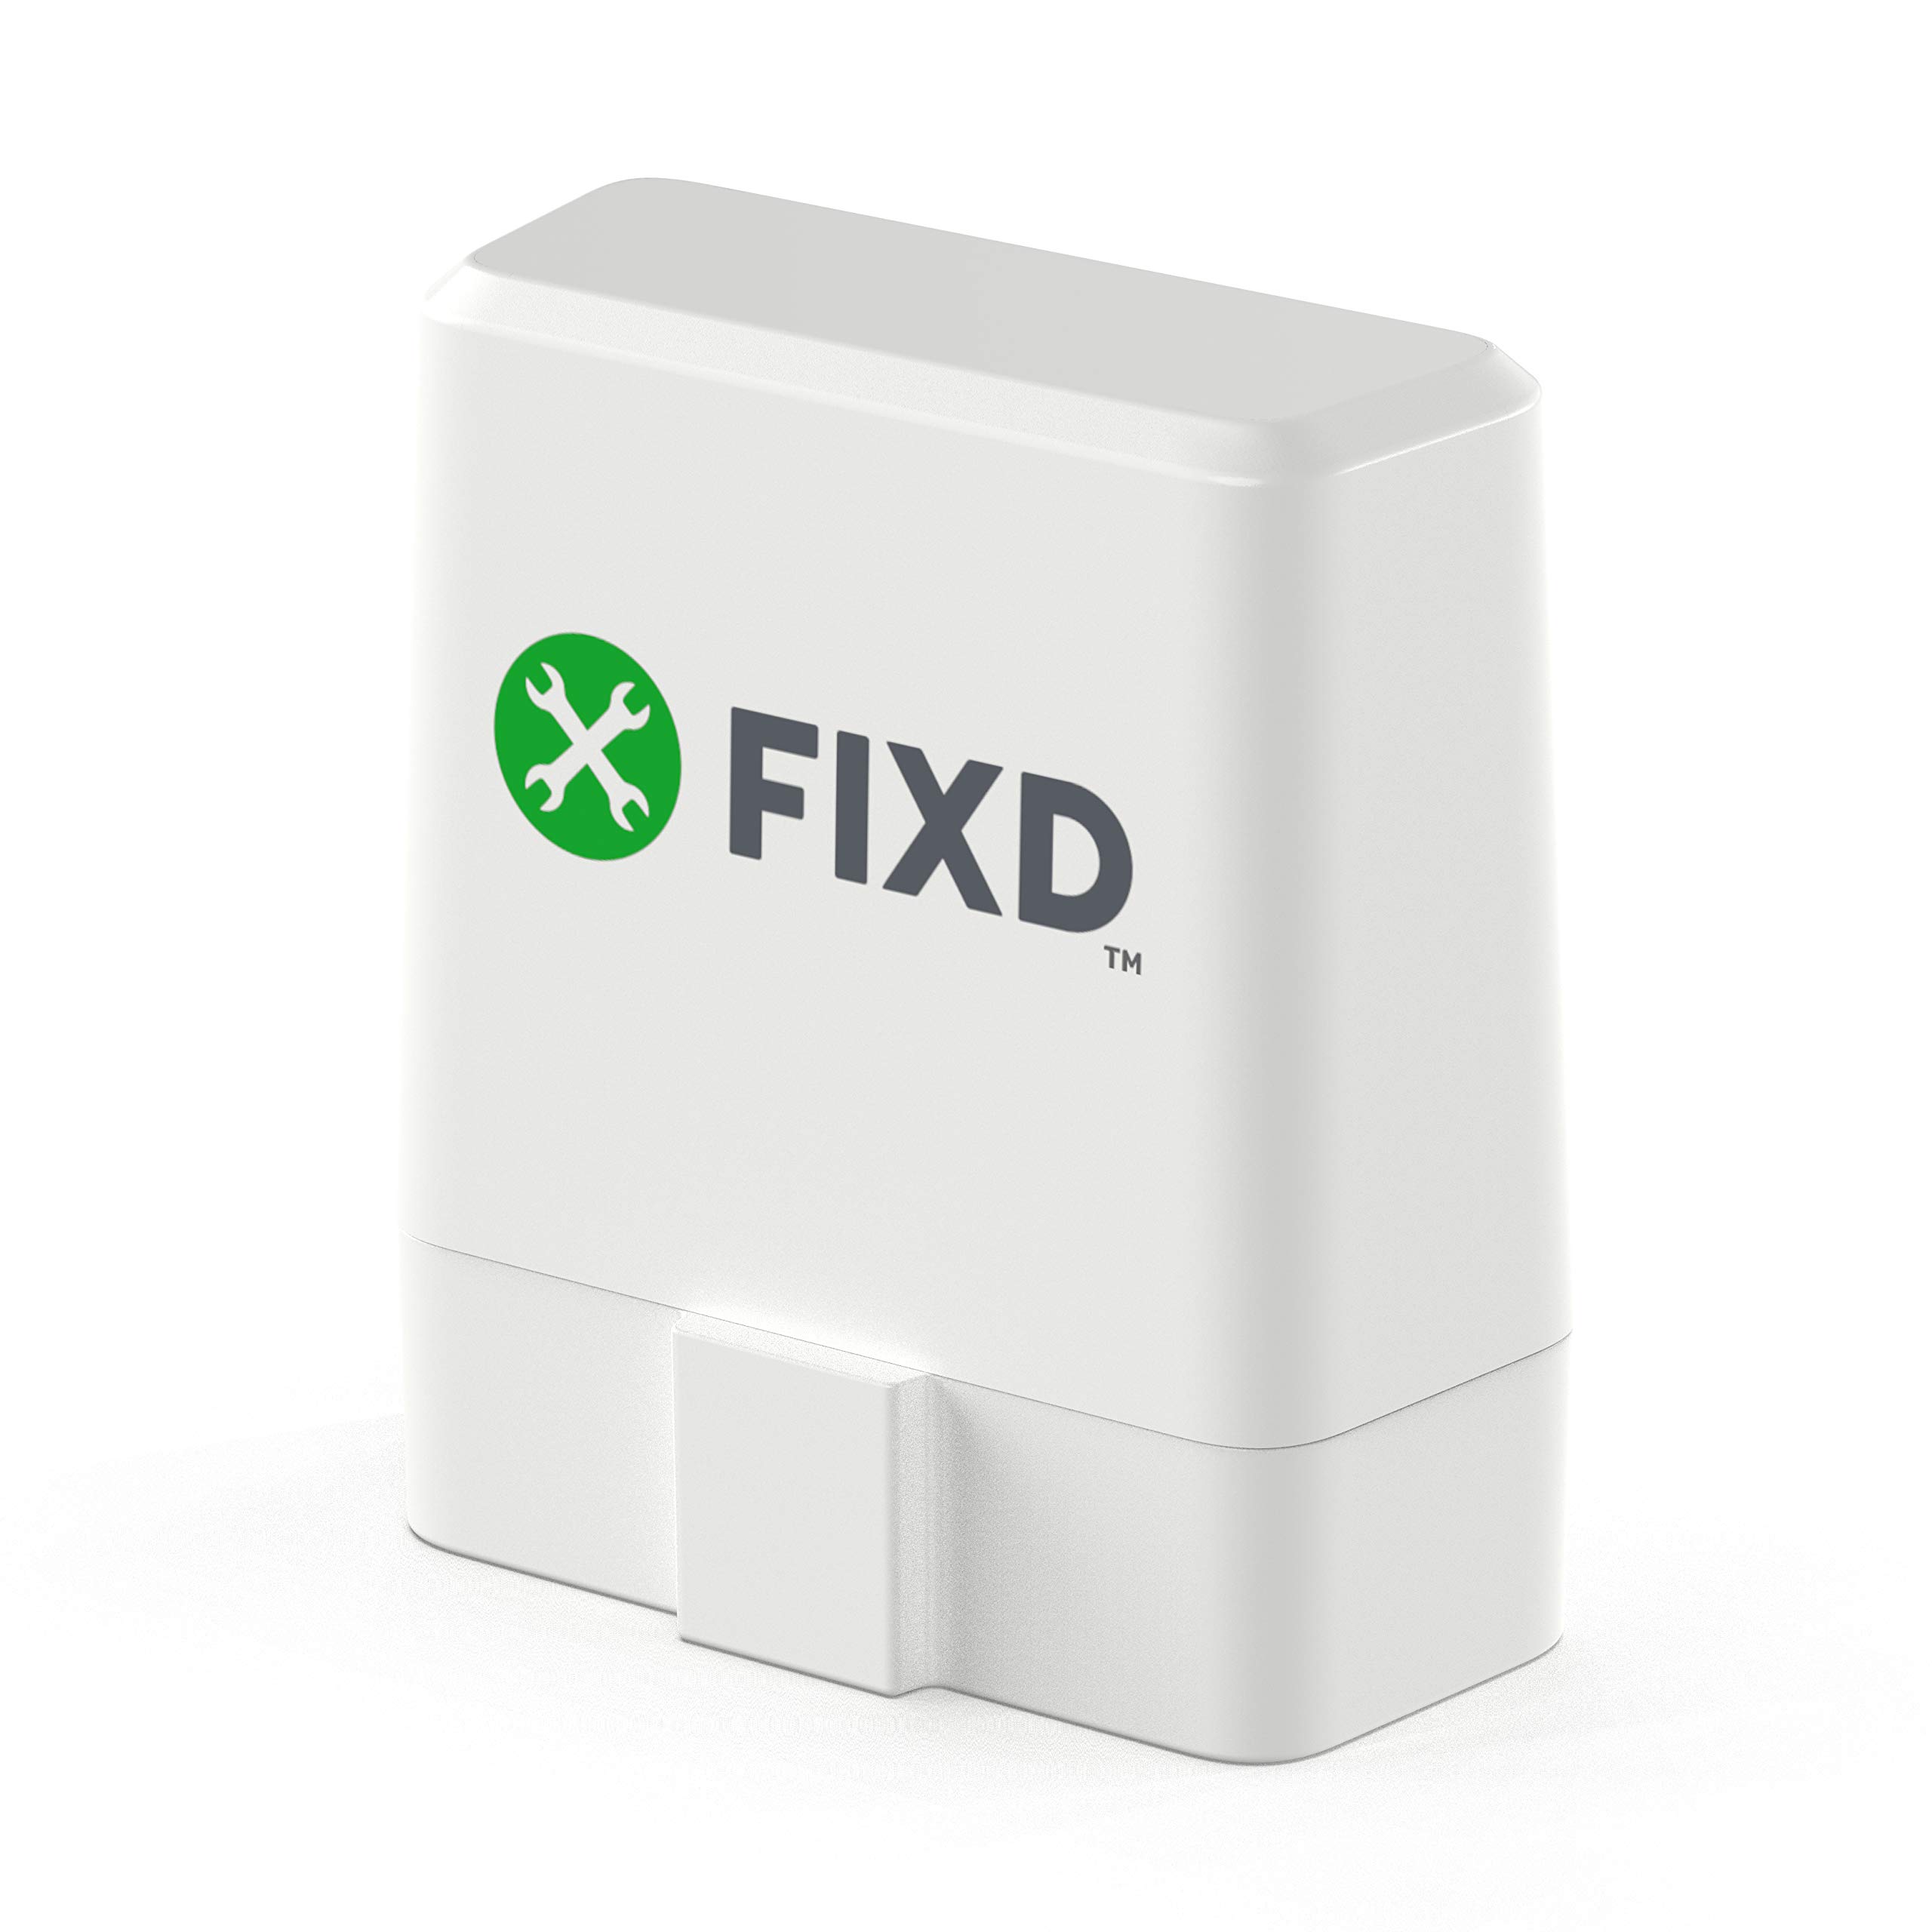  FIXD 汽车蓝牙 OBD2 扫描仪 - 适用于 iPhone 和 Android 的汽车代码读取器和扫描工具 - 用于检查发动机和修复所有汽车和车辆 96 或更新版本的无线 OBD2 自动...